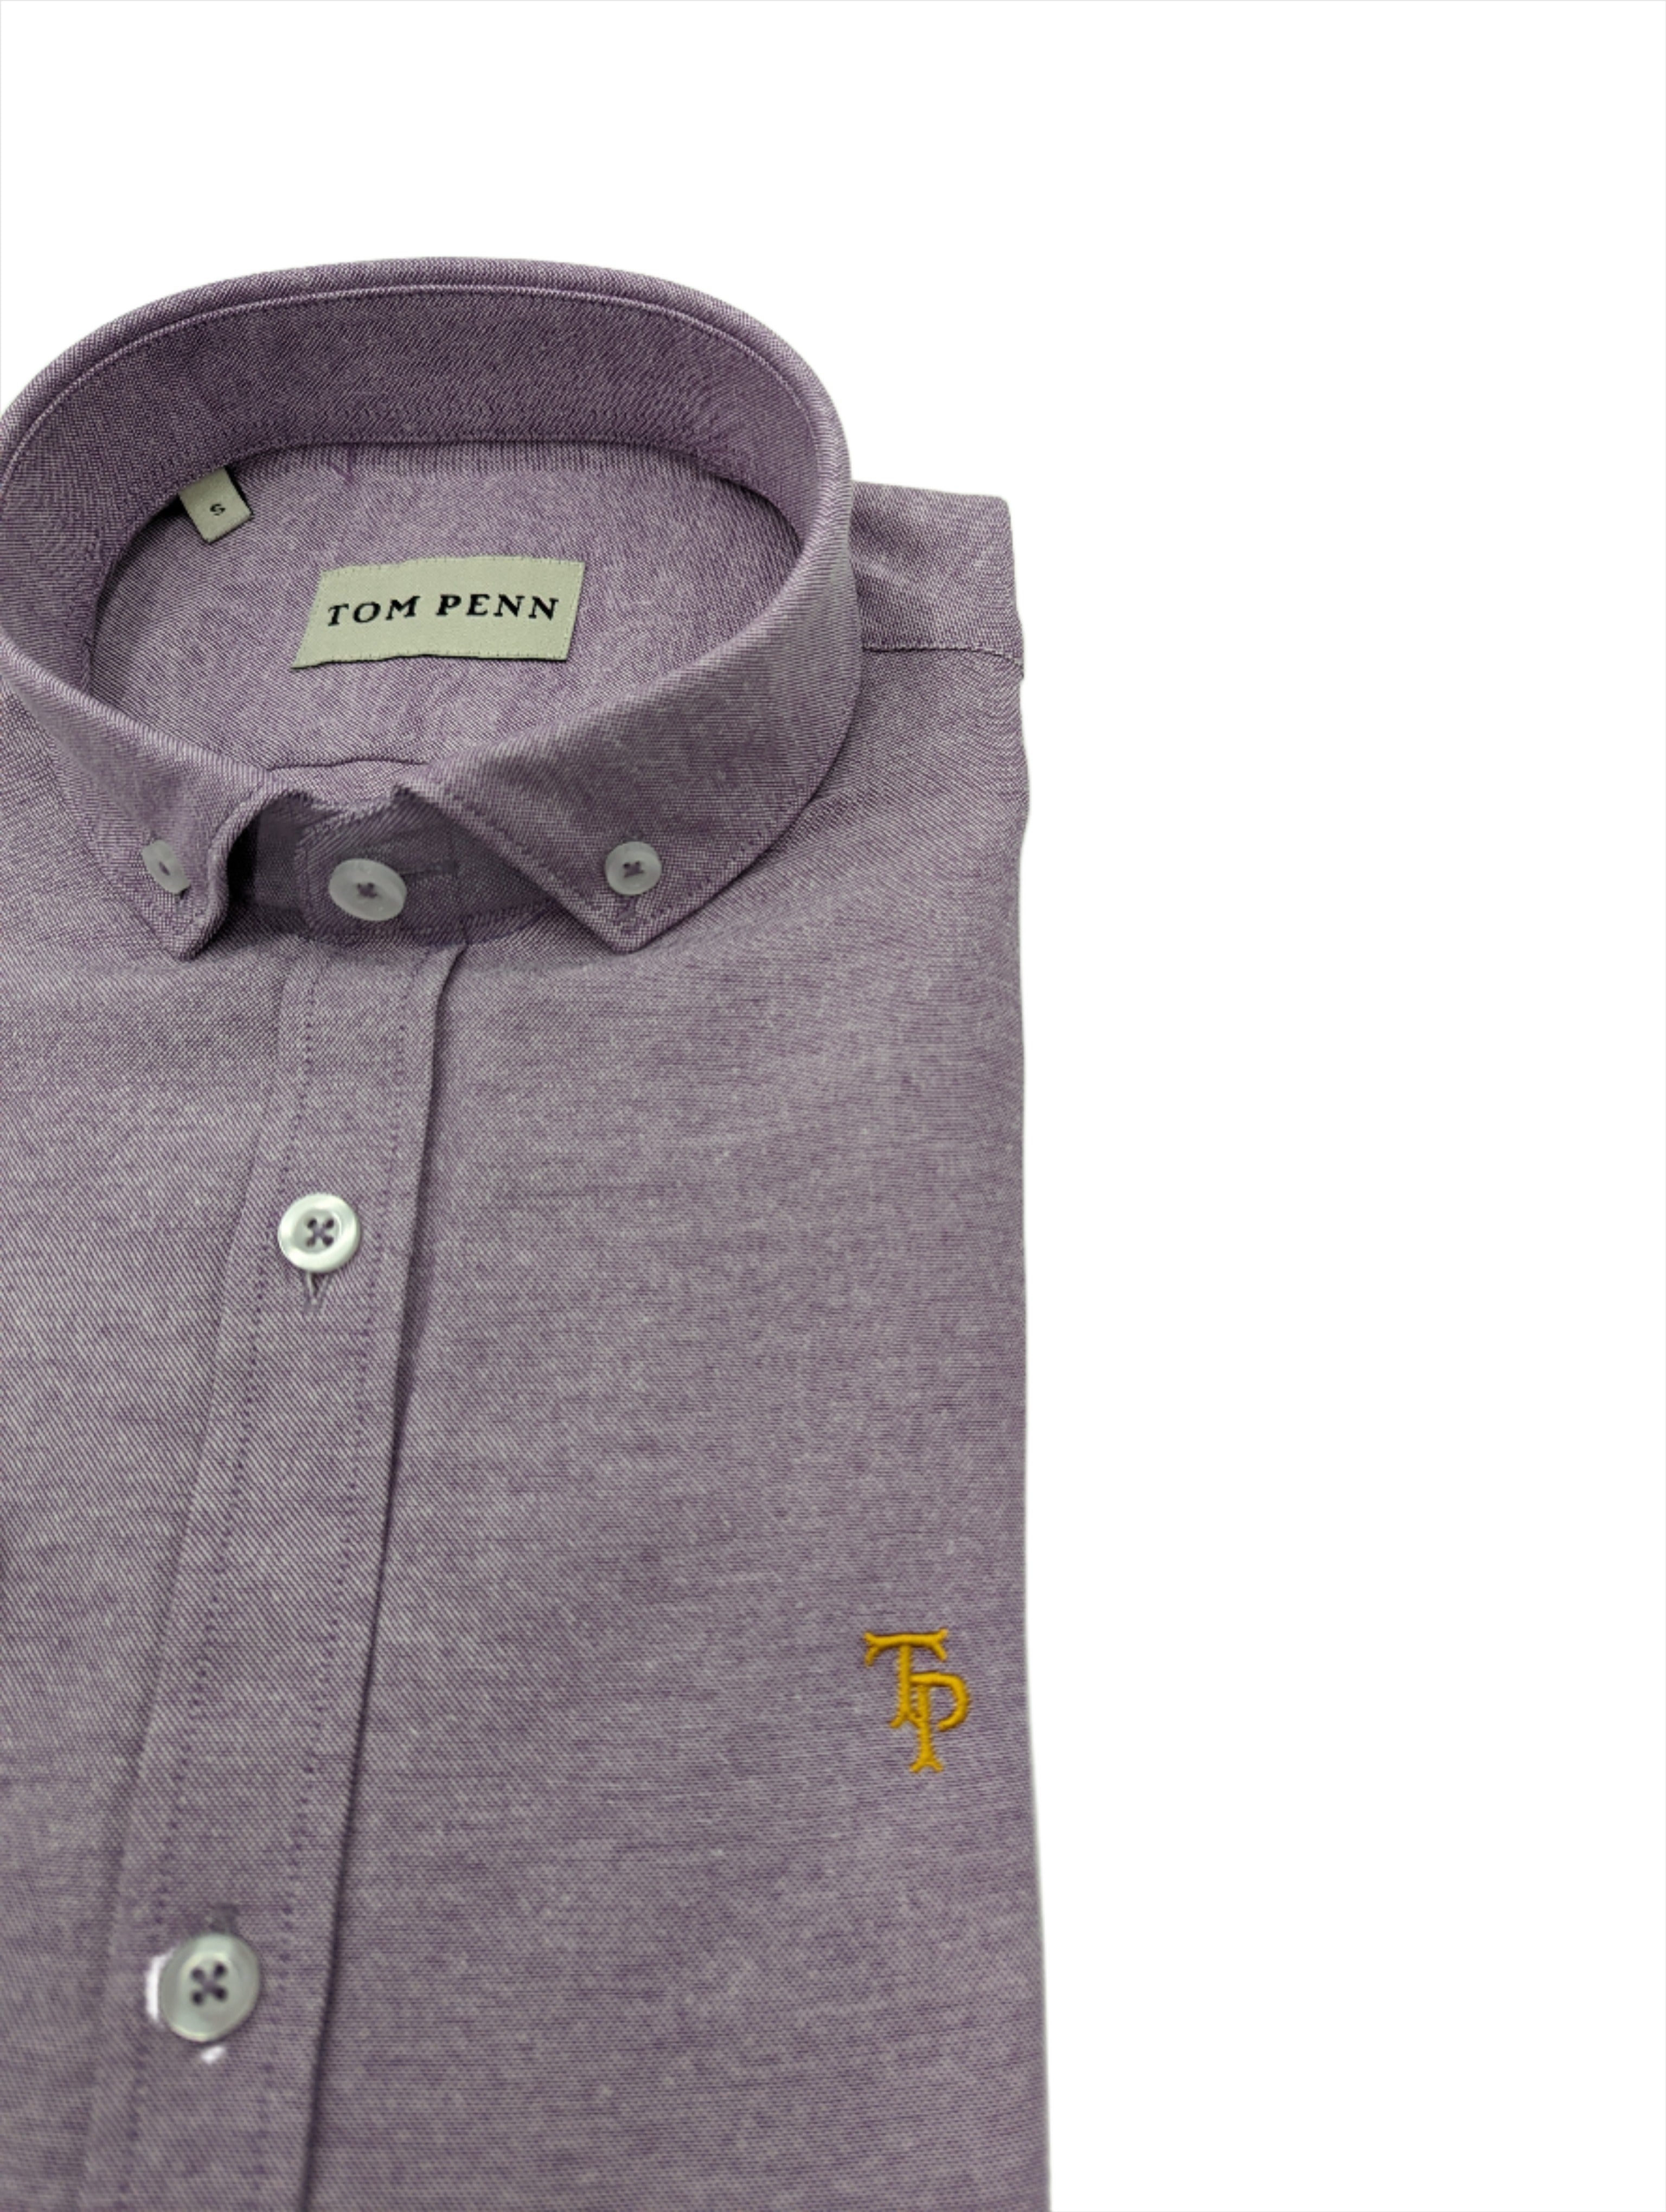 Tom Penn Slim fit Button Down Dark Lilac Shirt-Close up fabric view